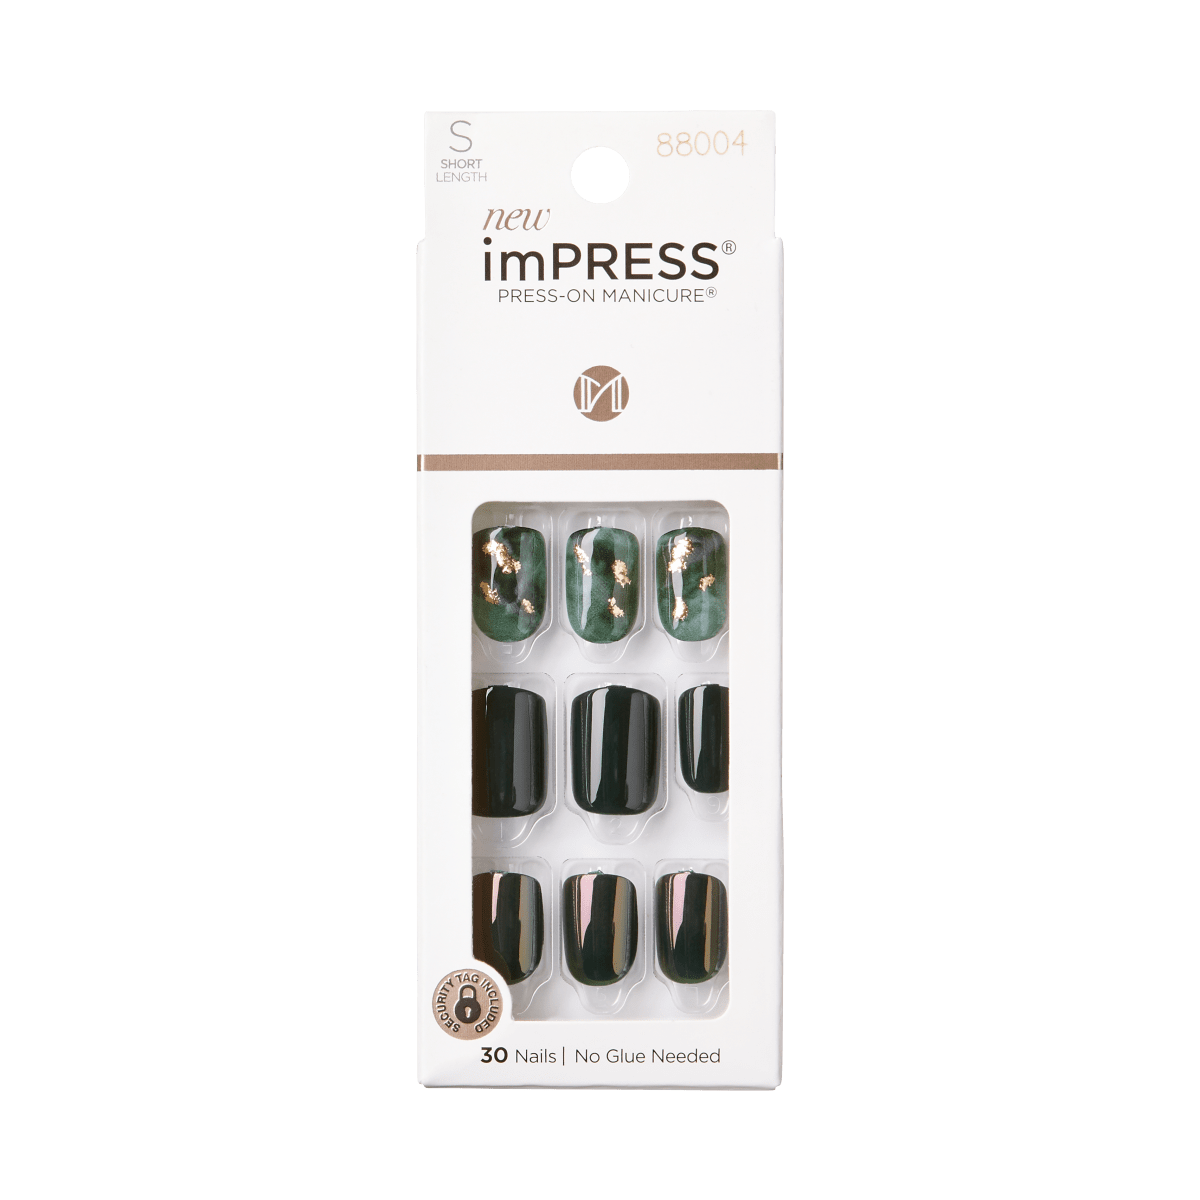 imPRESS Press-On Manicure - Set in Stone